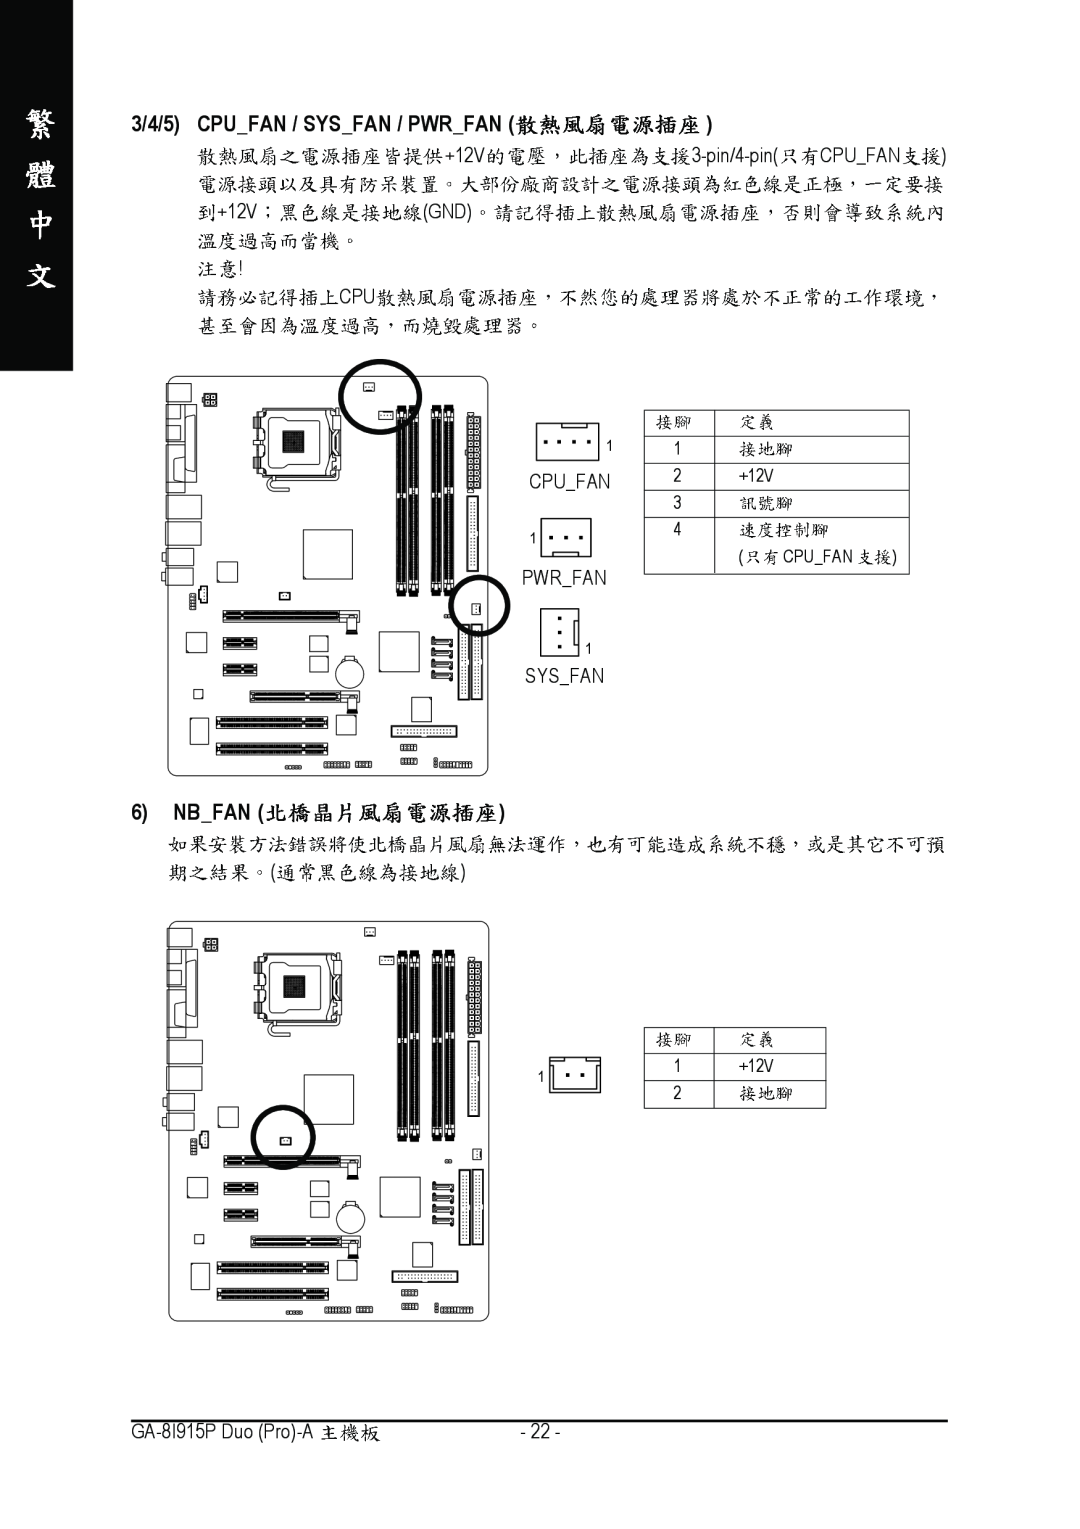 Gigabyte GA-8I915P manual 3/4/5 CPUFAN / SYSFAN / PWRFAN, Nbfan, +12V3-pin/4-pinCPUFAN +12VGND, Cpufan, Pwrfan, Sysfan 